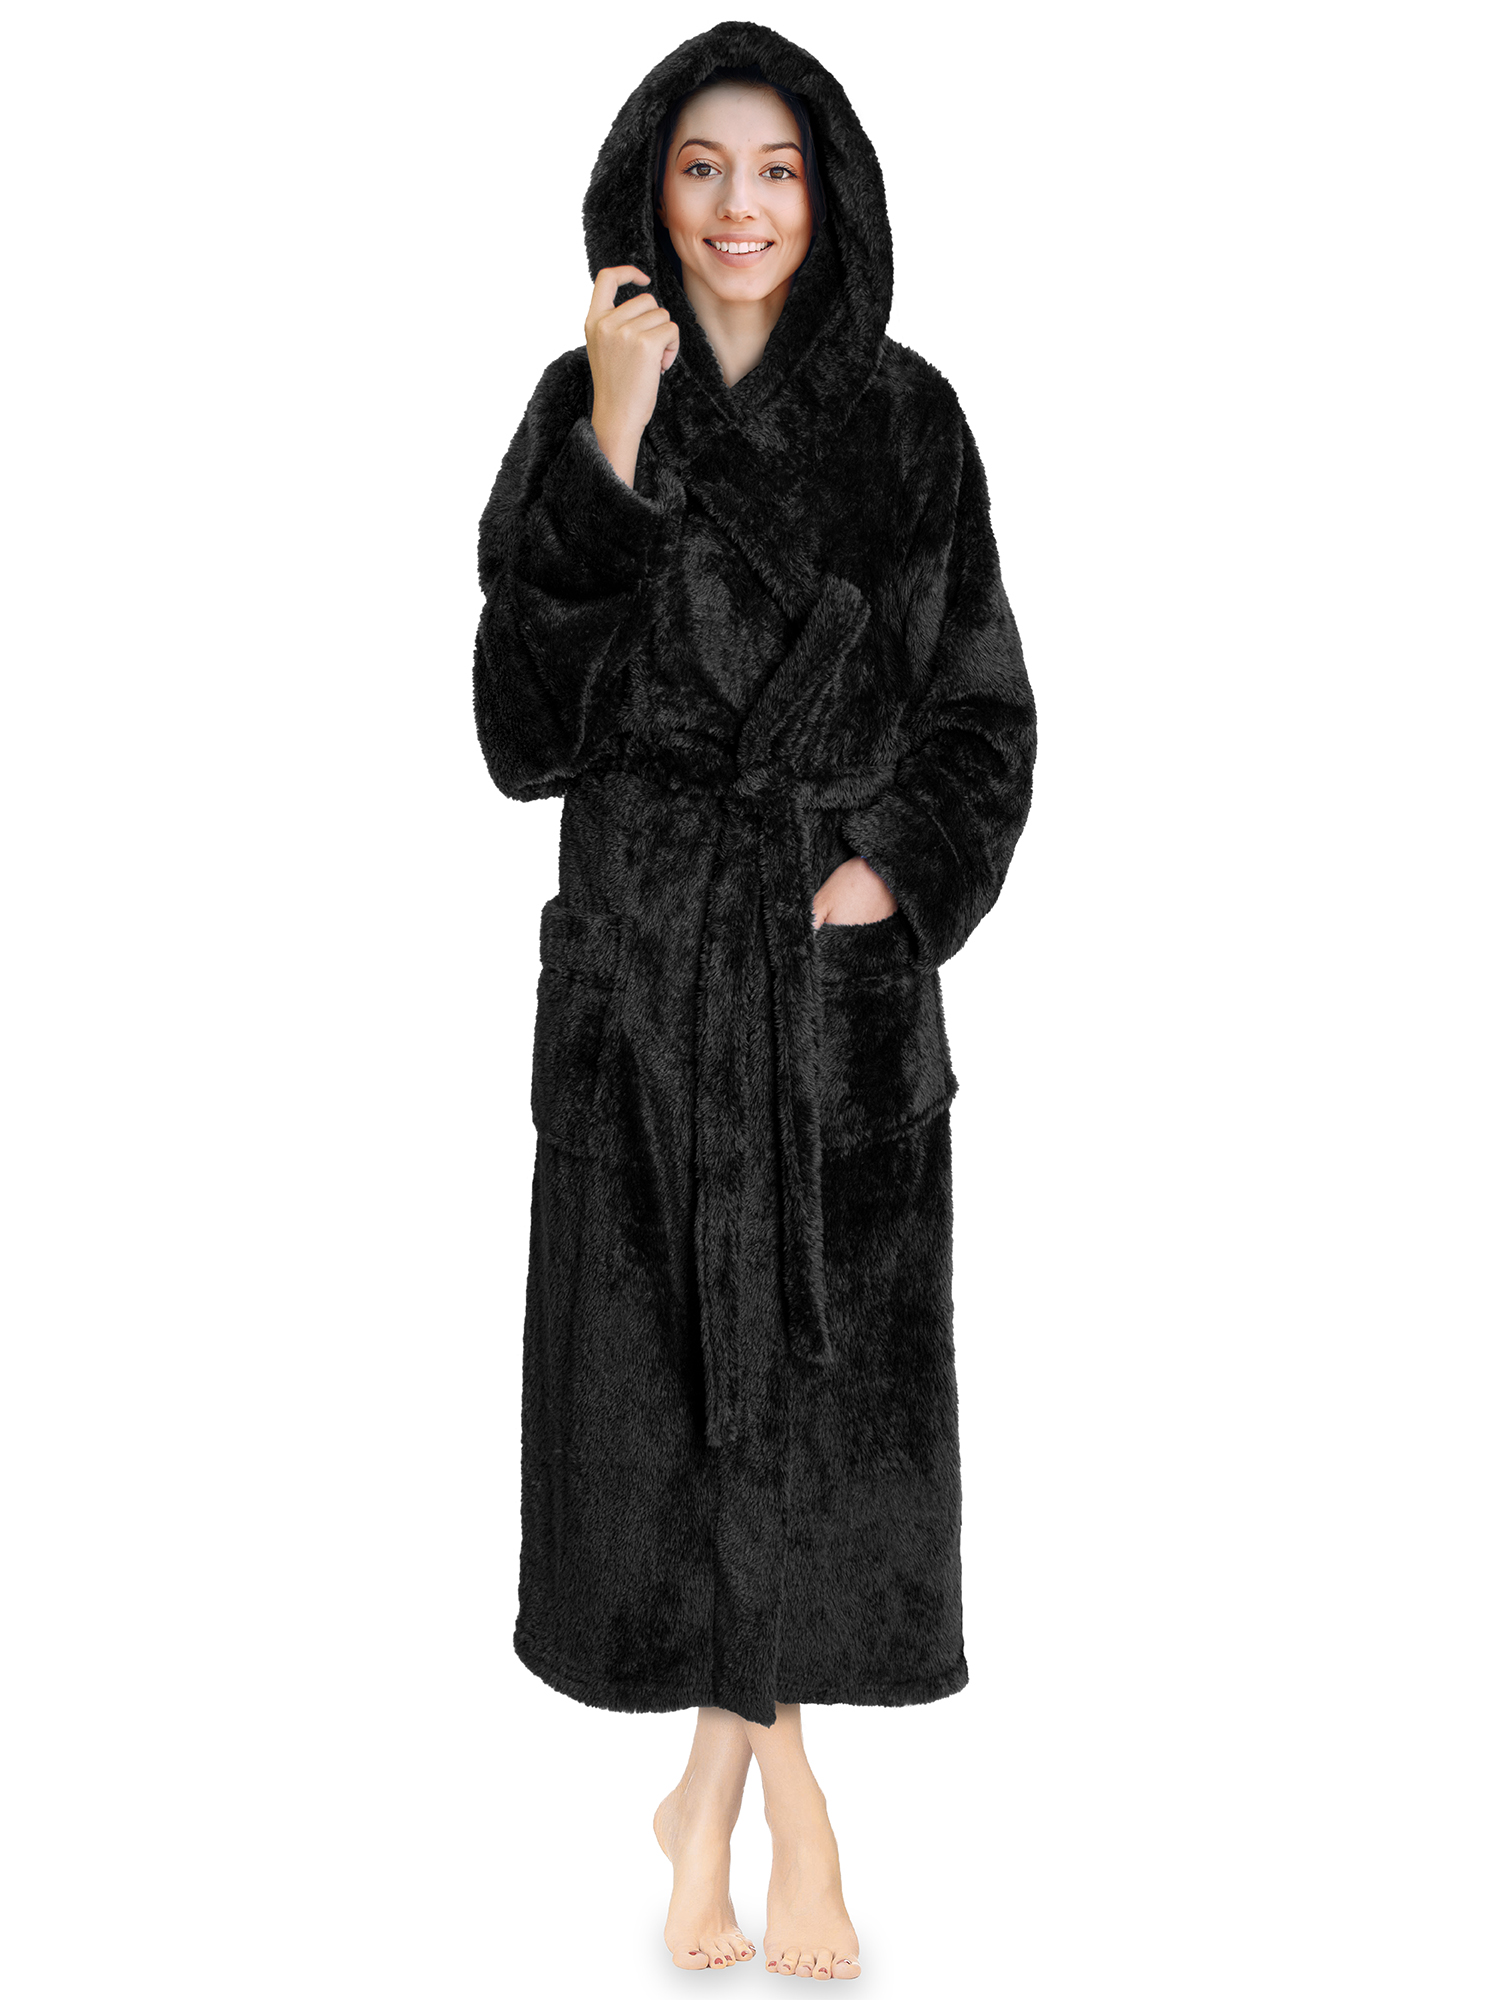 PAVILIA Women Hooded Plush Soft Robe | Fluffy Warm Fleece Sherpa Shaggy Bathrobe (L/XL, Black) - image 1 of 7